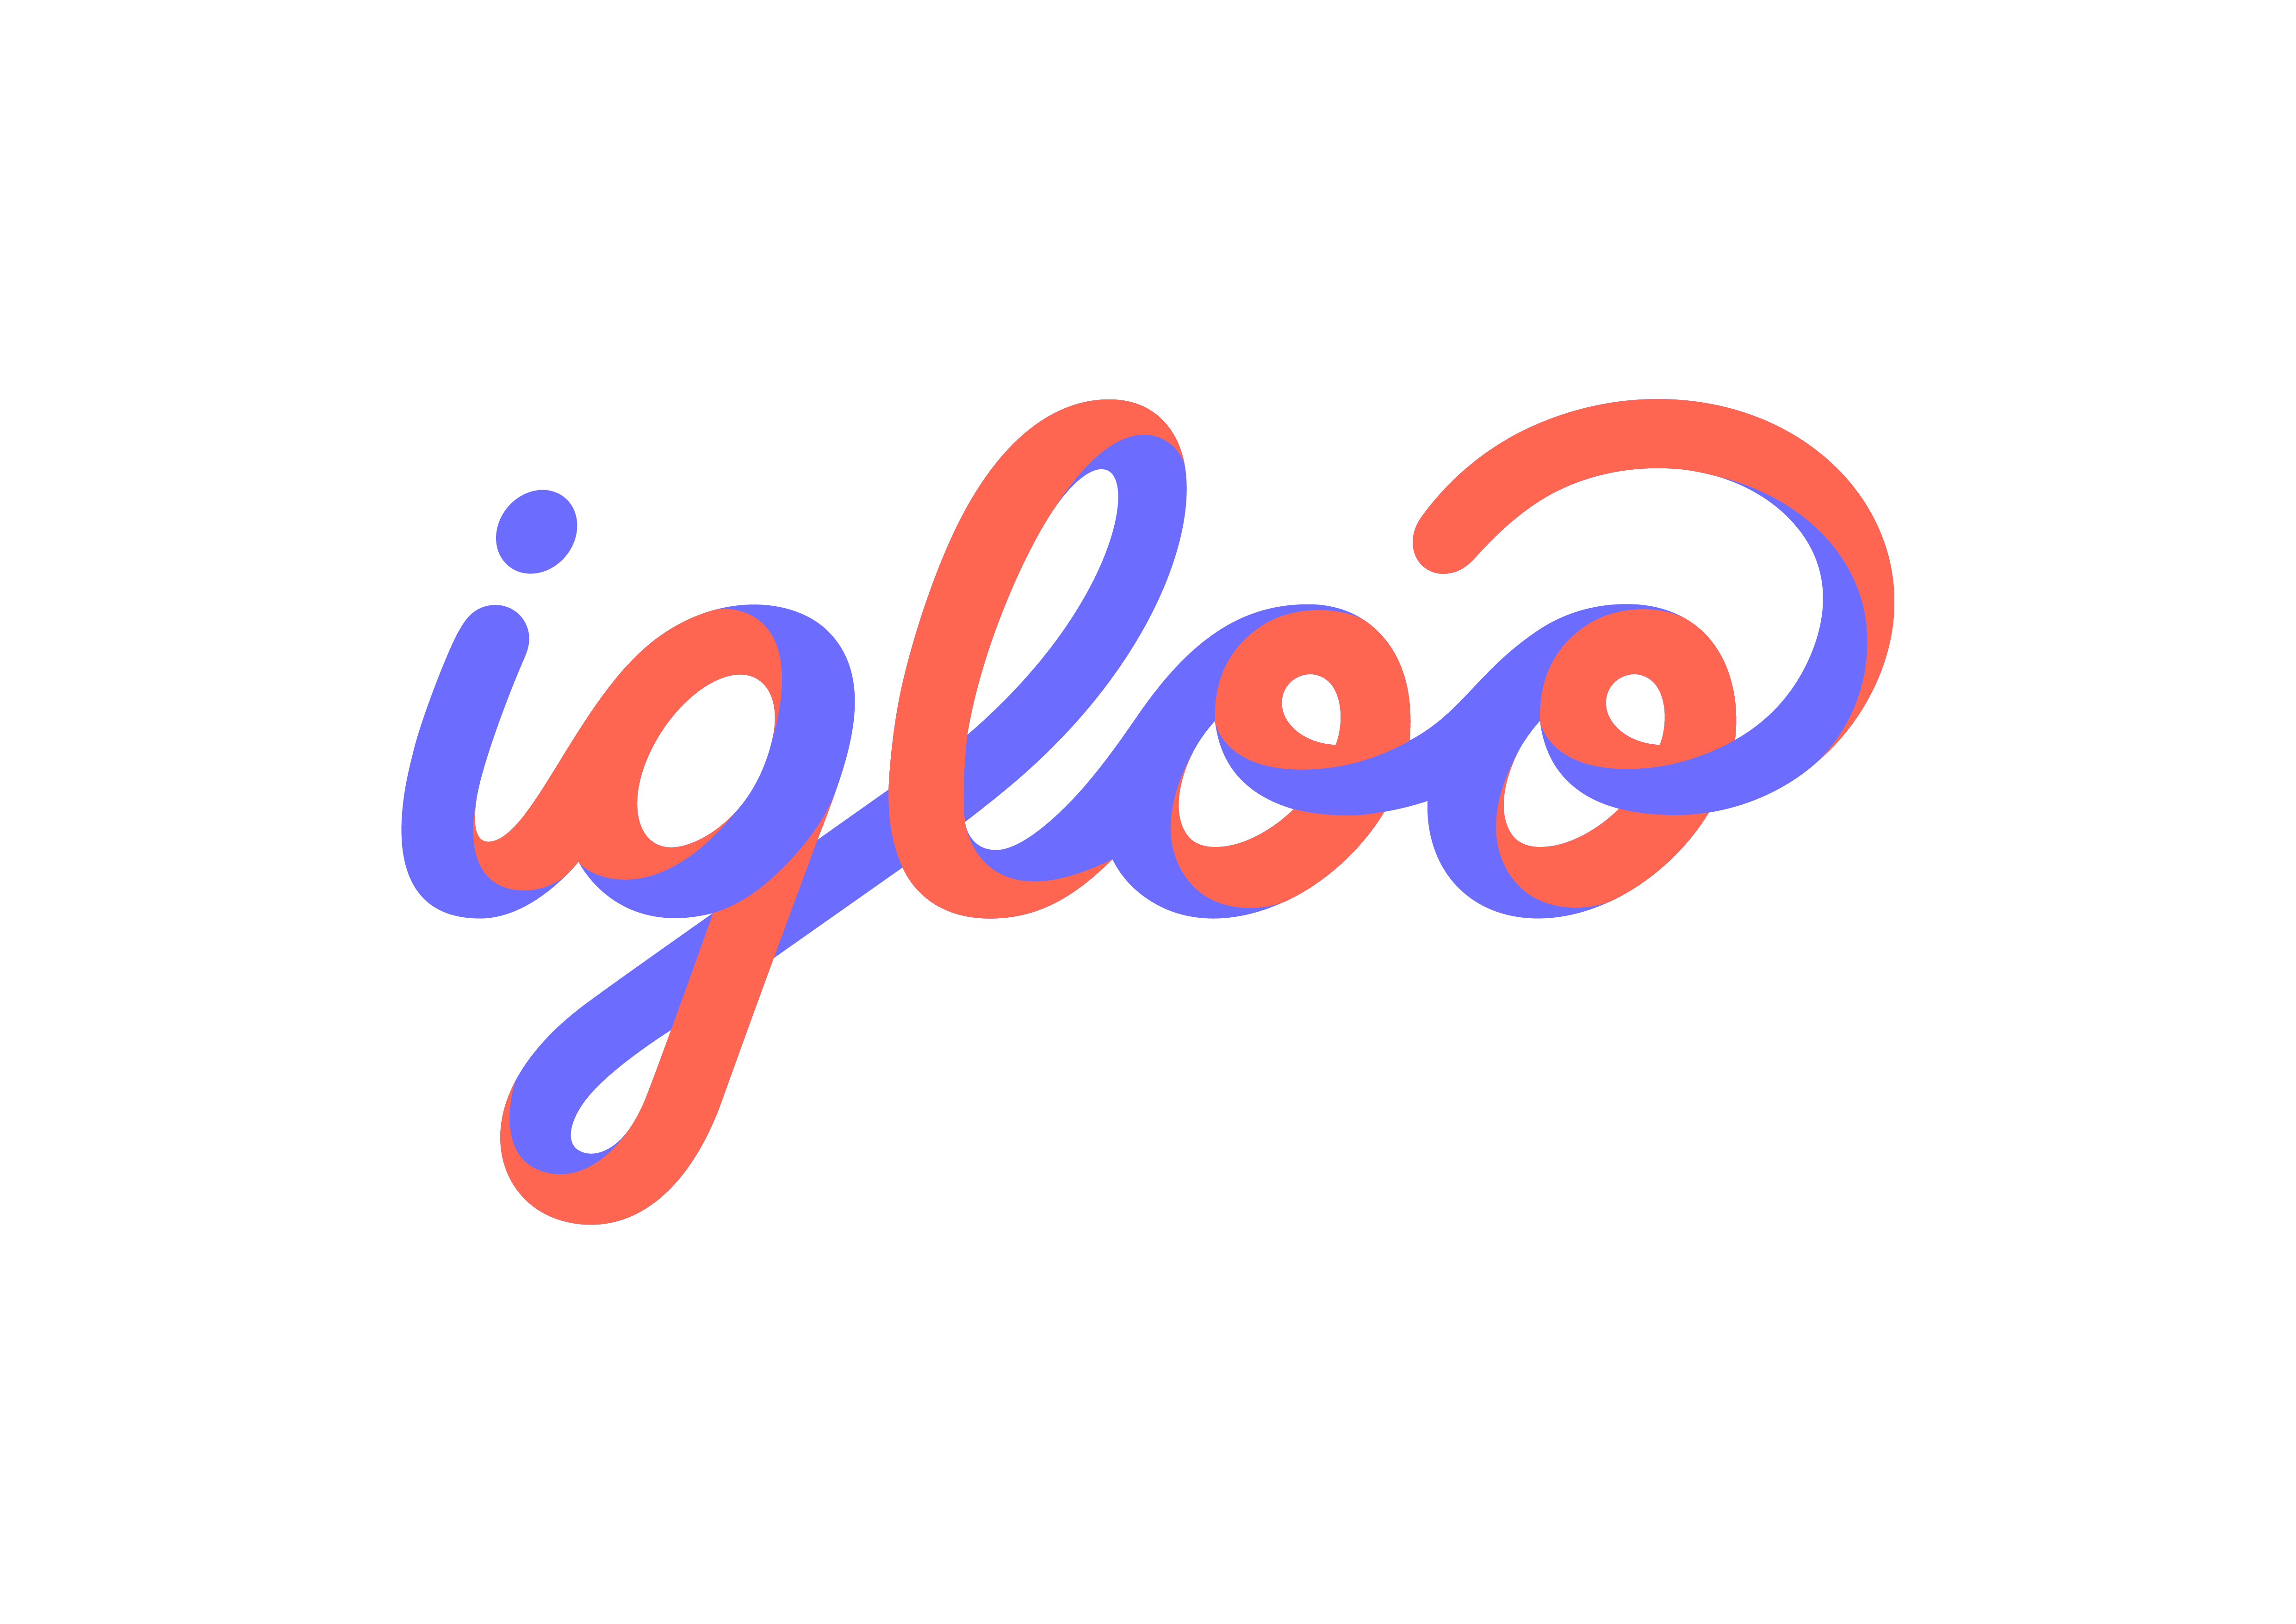 Design jobs at Igloo